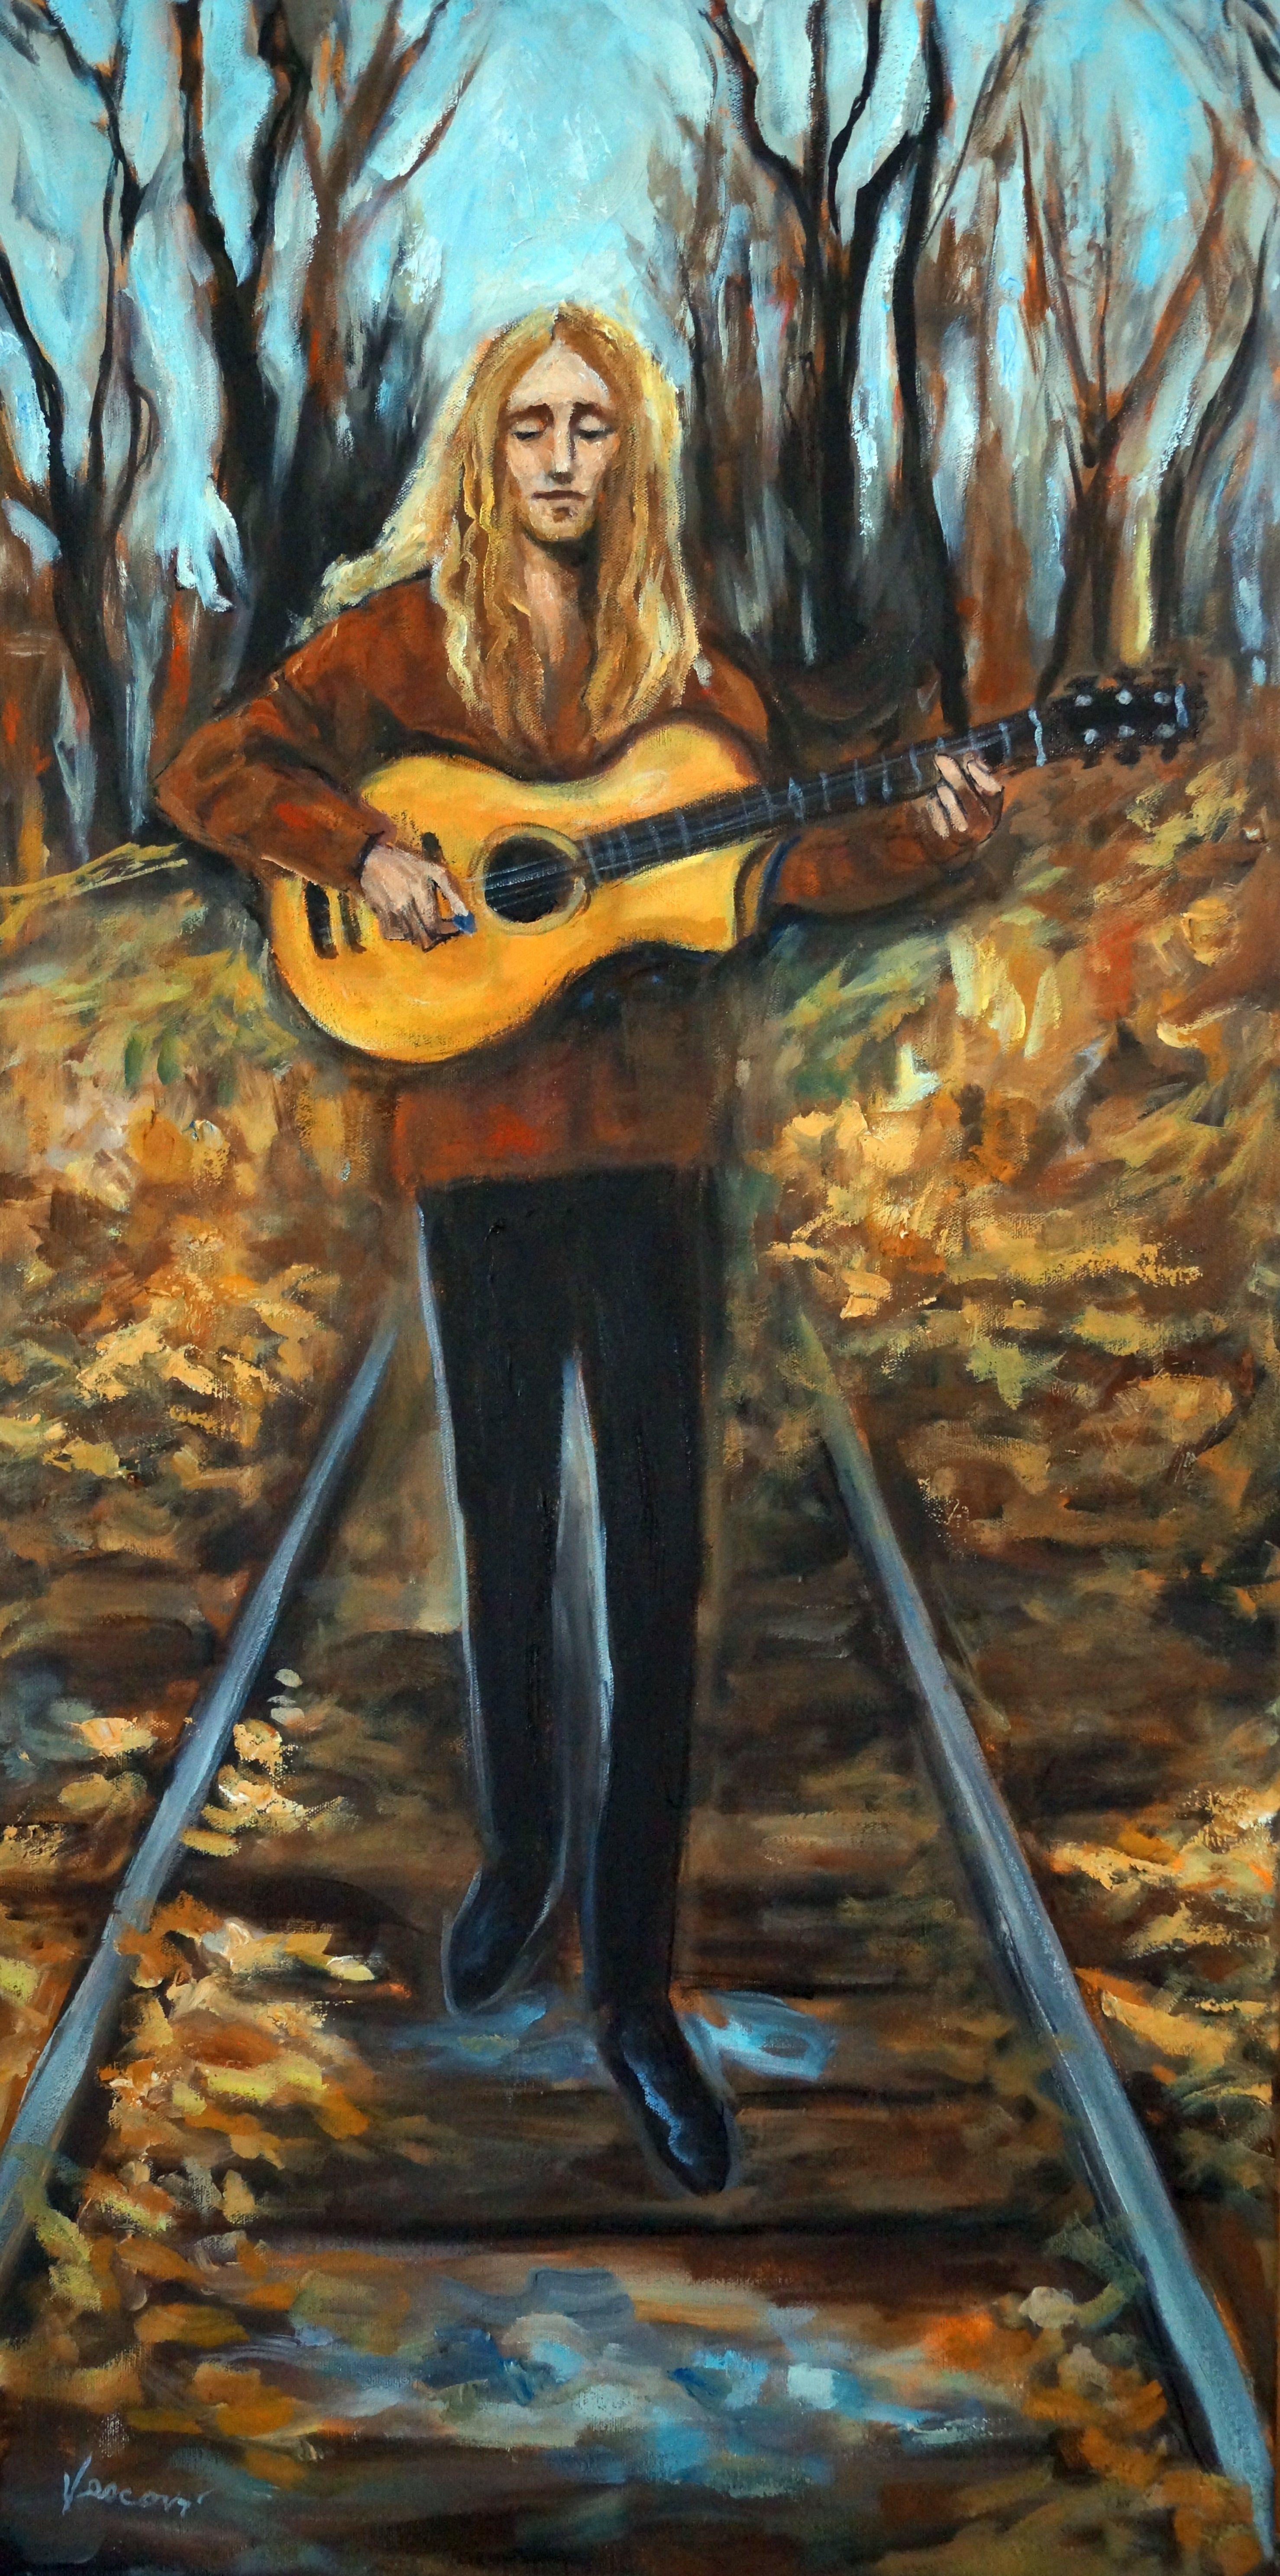 Le Guitariste, Gemälde, Öl auf Leinwand – Painting von Valerie Vescovi